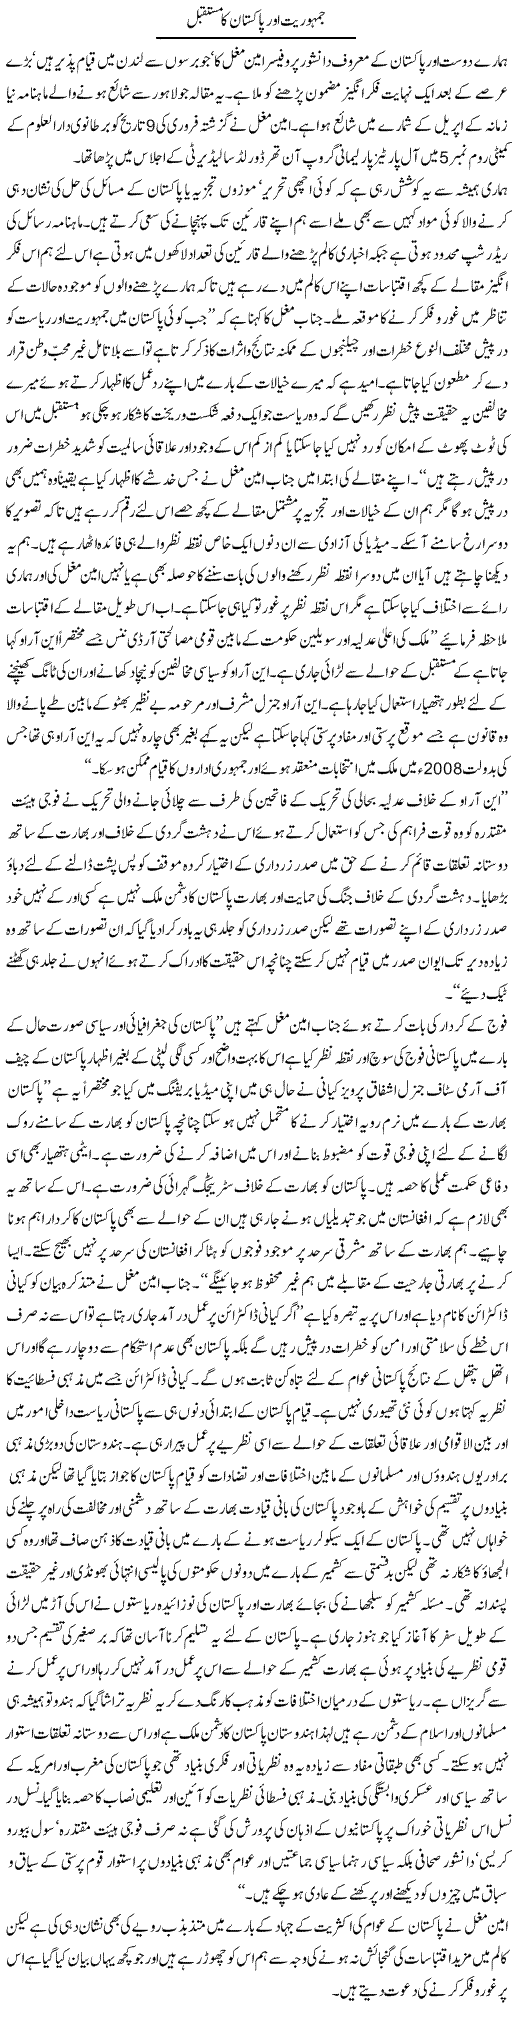 Jamhoriyat aur Pakistan Express Column Hameed Akhtar 9 April 2010